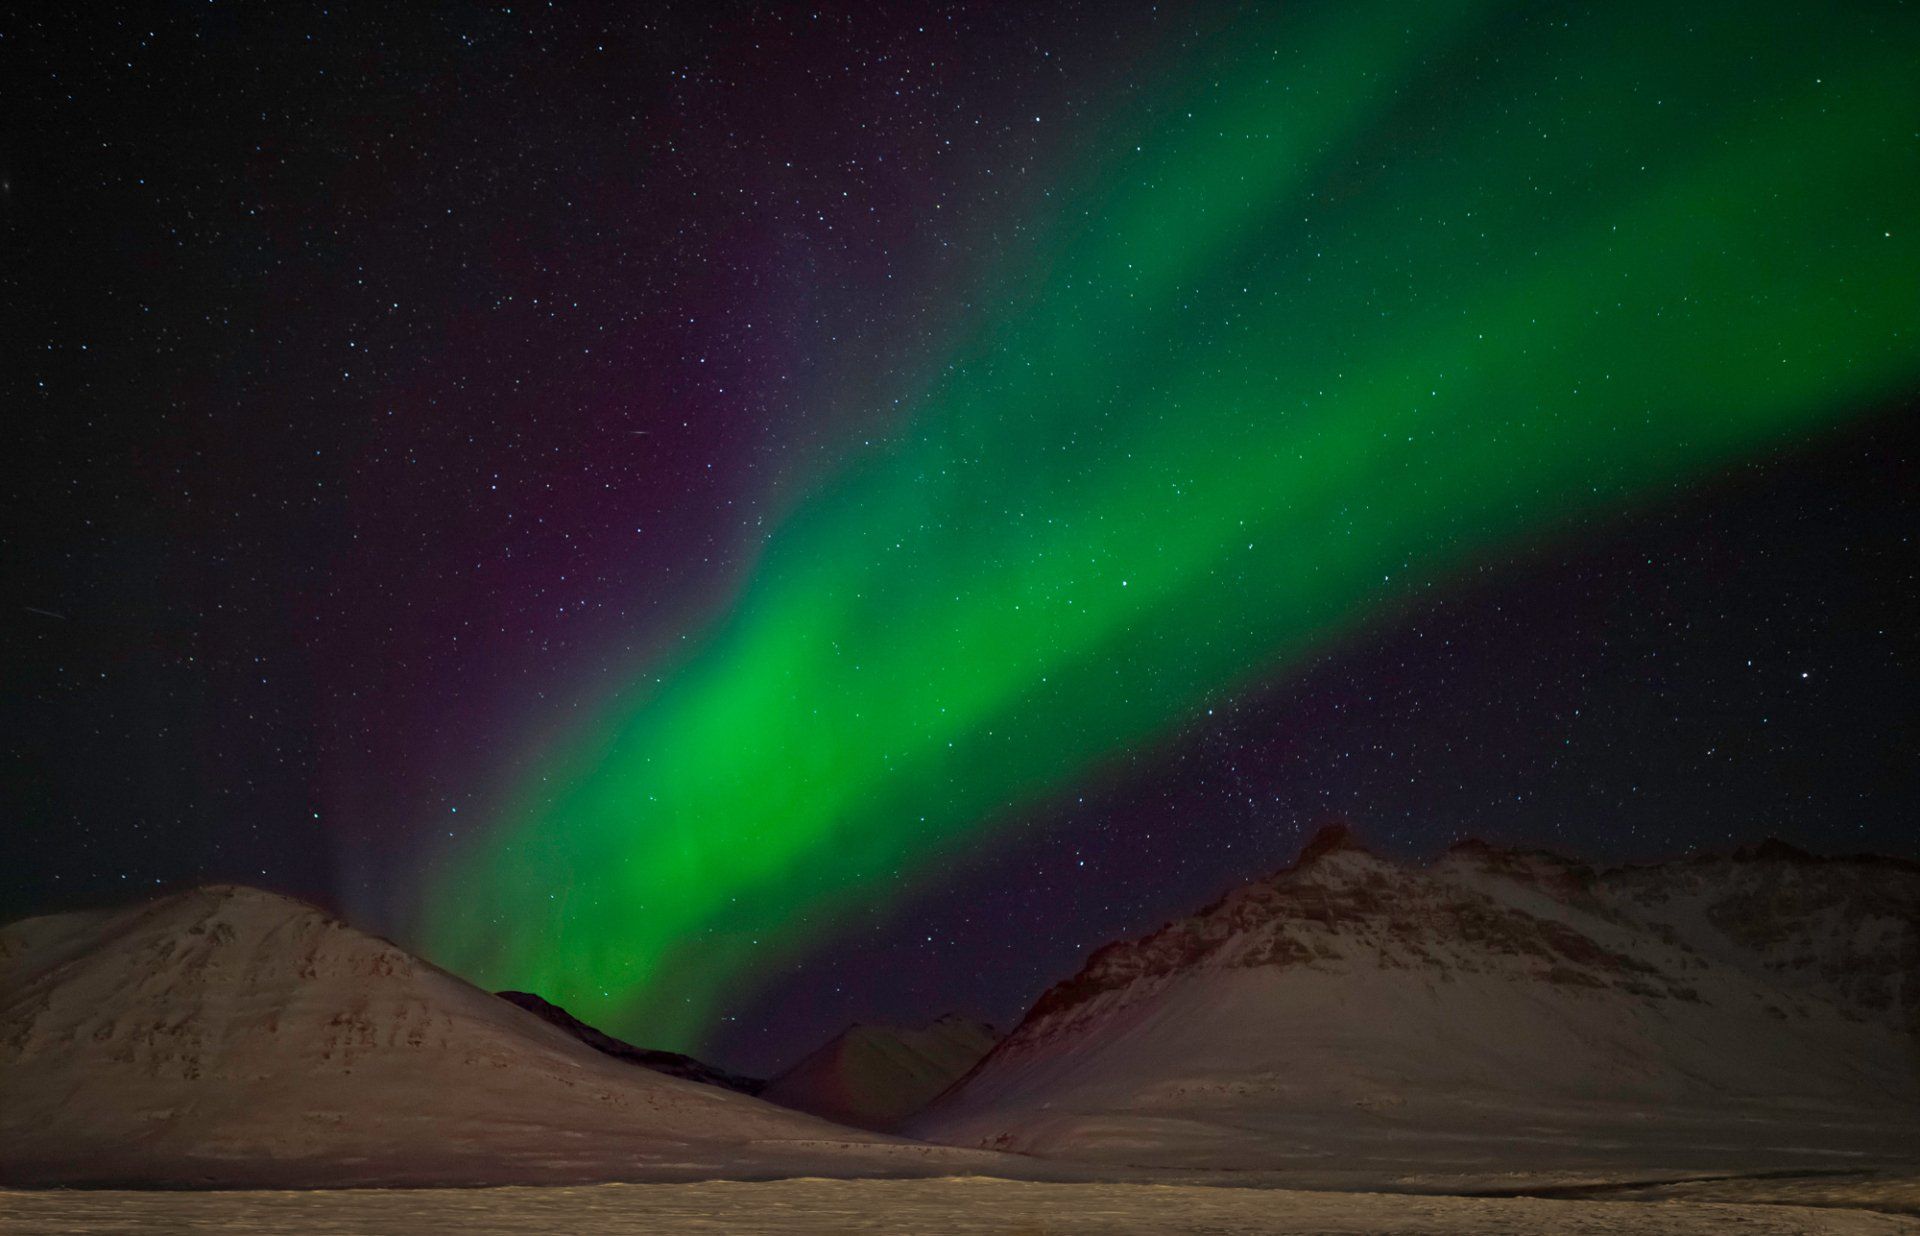 The aurora fills the night sky above Anaktuvuk Pass, Alaska.